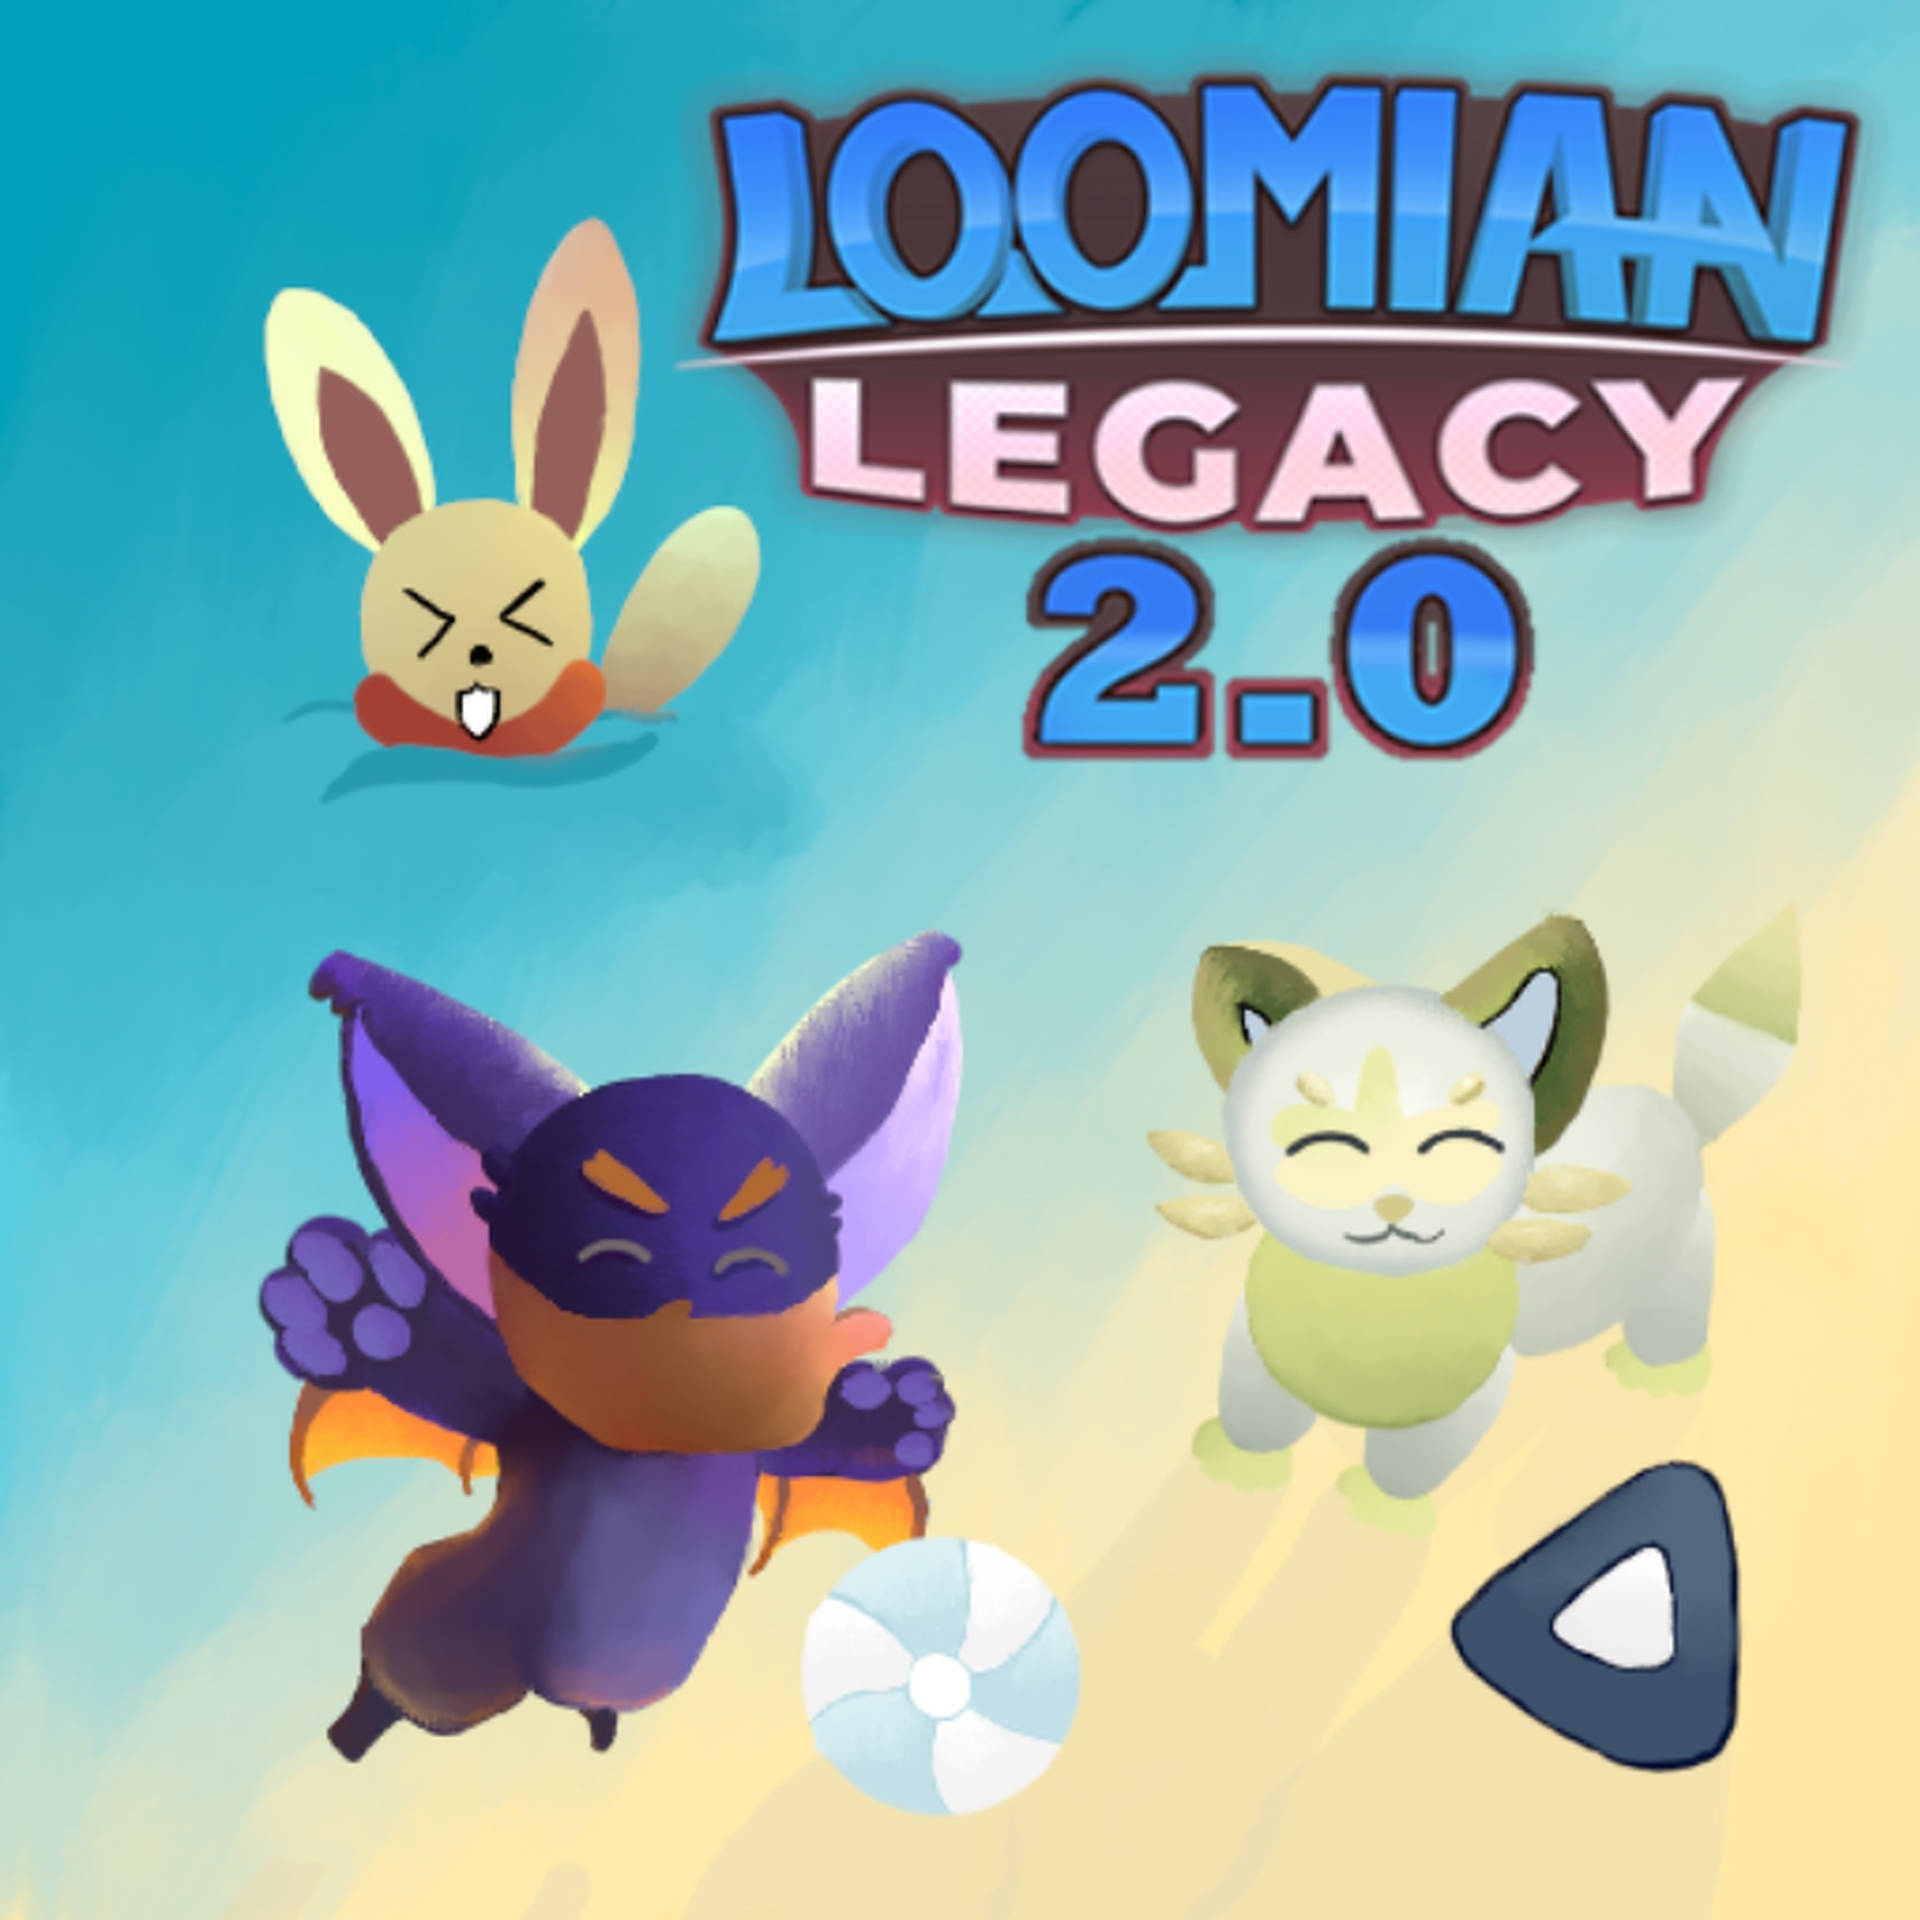 Loomian Legacy 2.0 Version